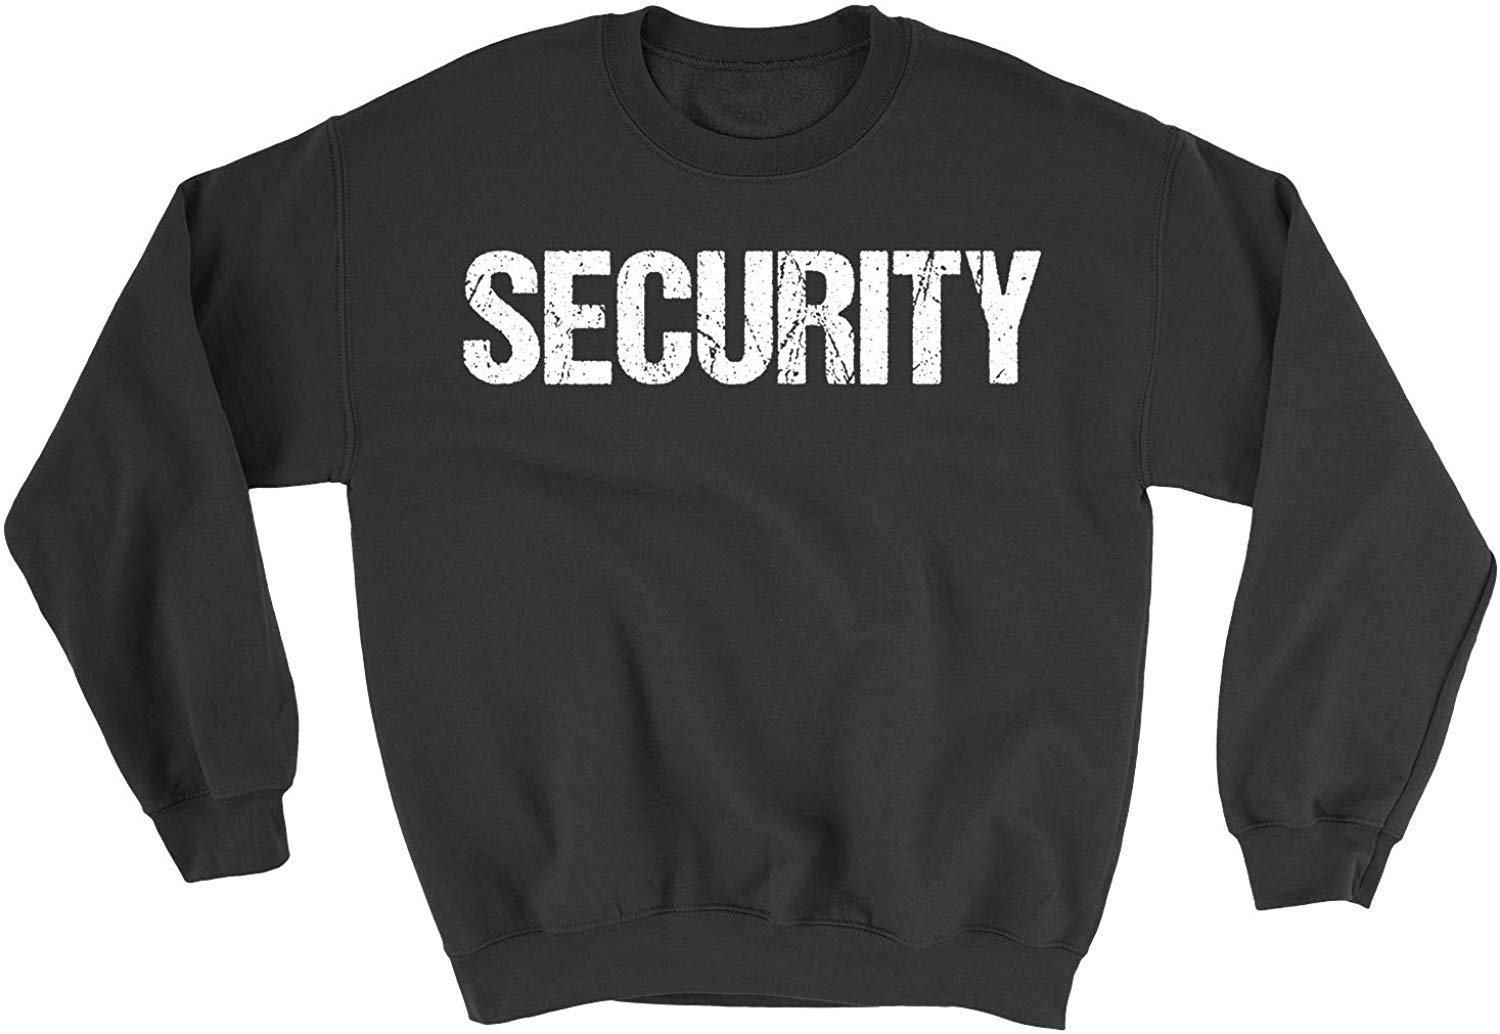 Men's Security Crewneck Sweatshirt (Distressed Design, Black / White)